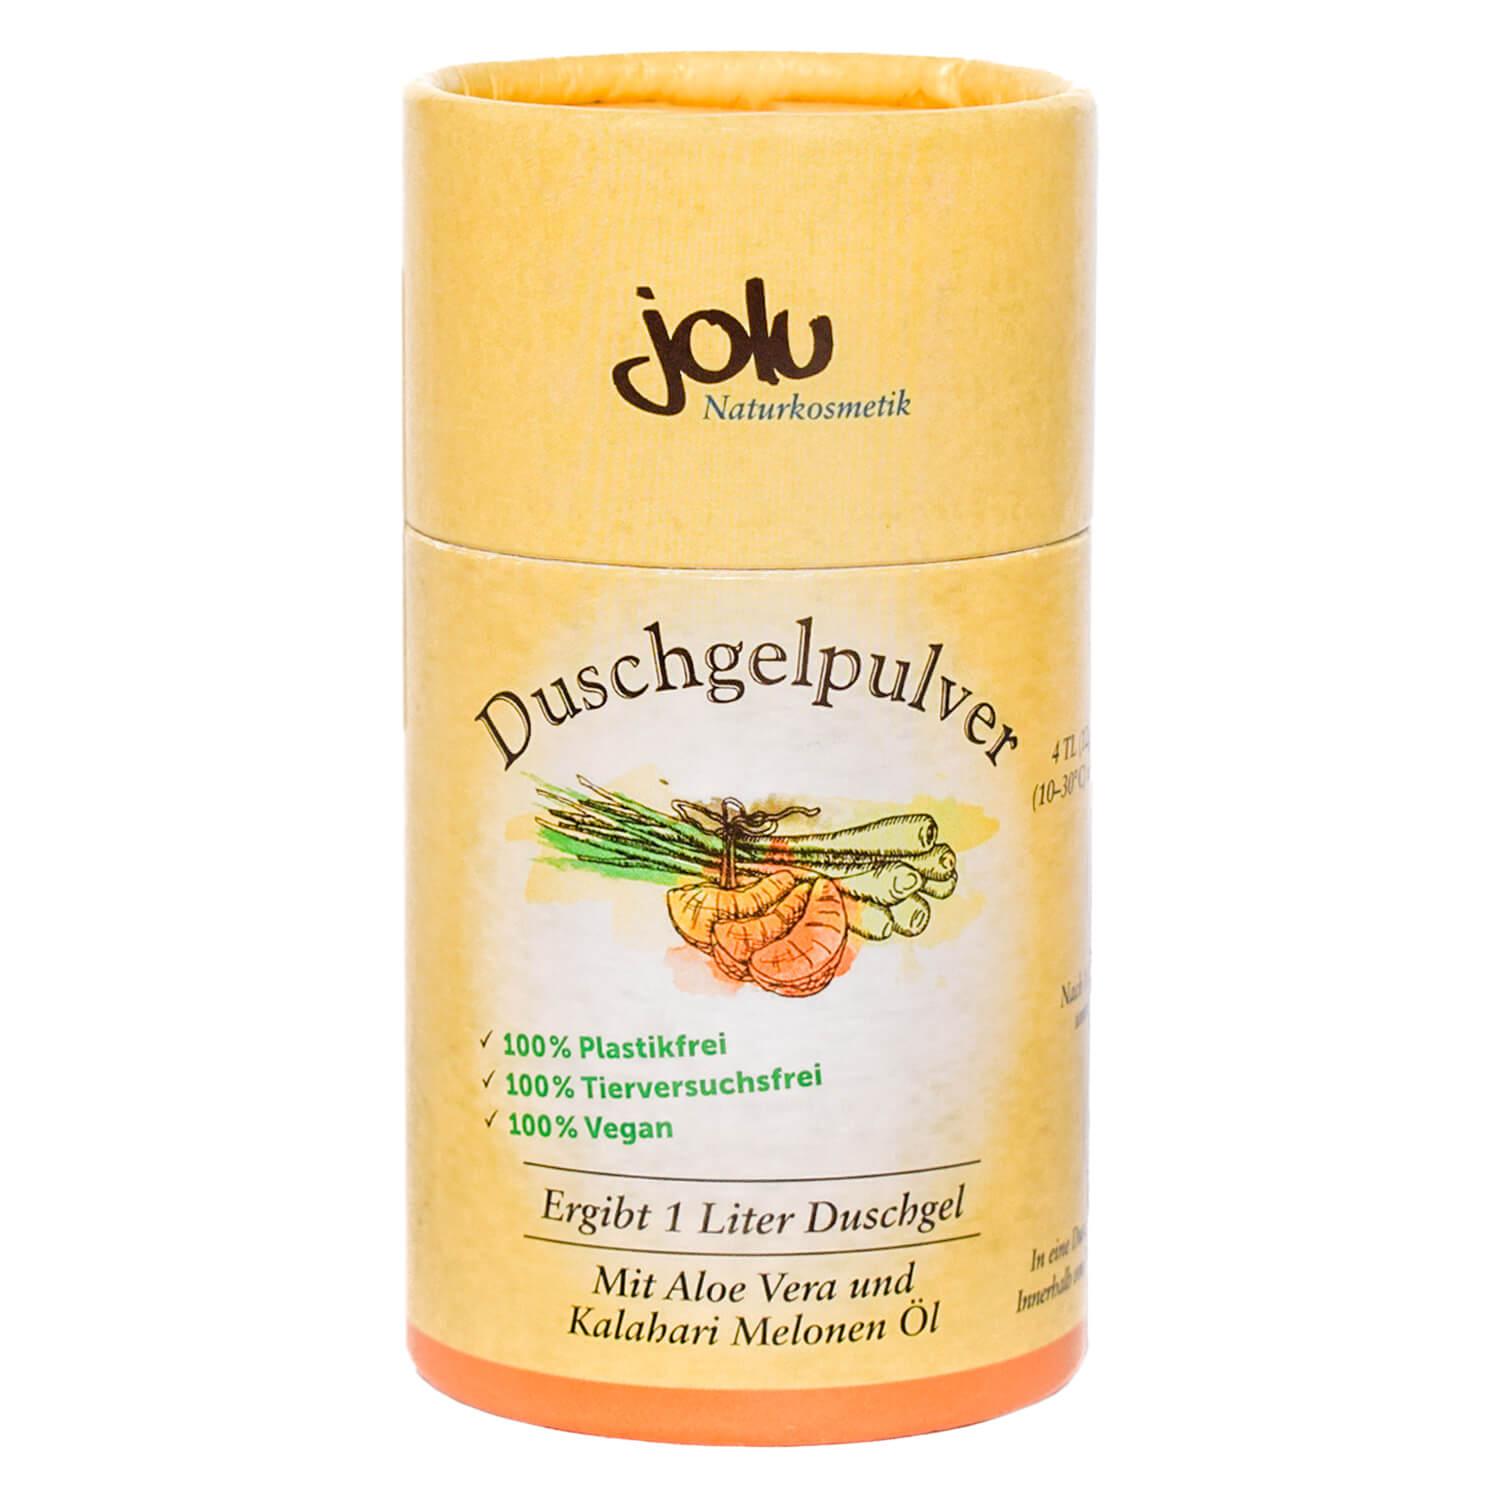 jolu - Duschgelpulver Mandarine/Lemongras